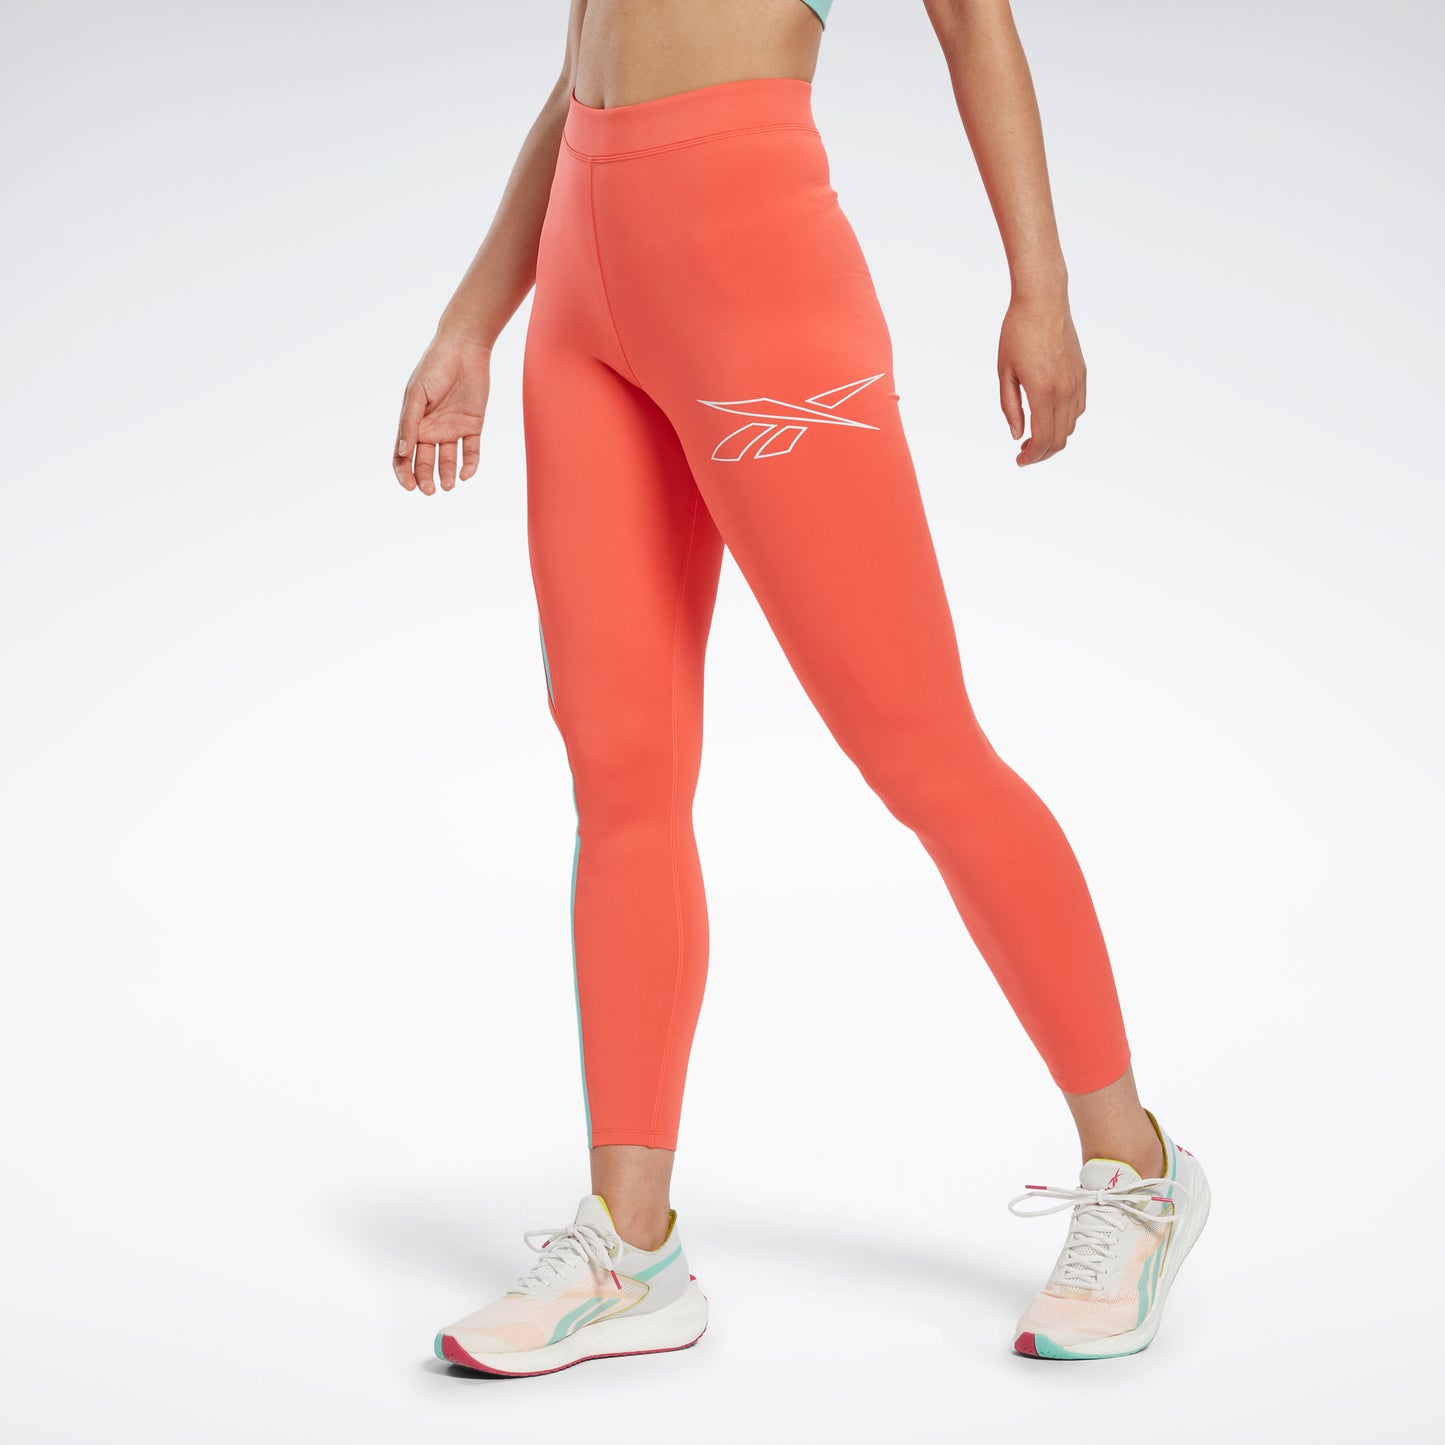 Nike Training Women's One Dri Fit Leopard Print Leggings Pockets